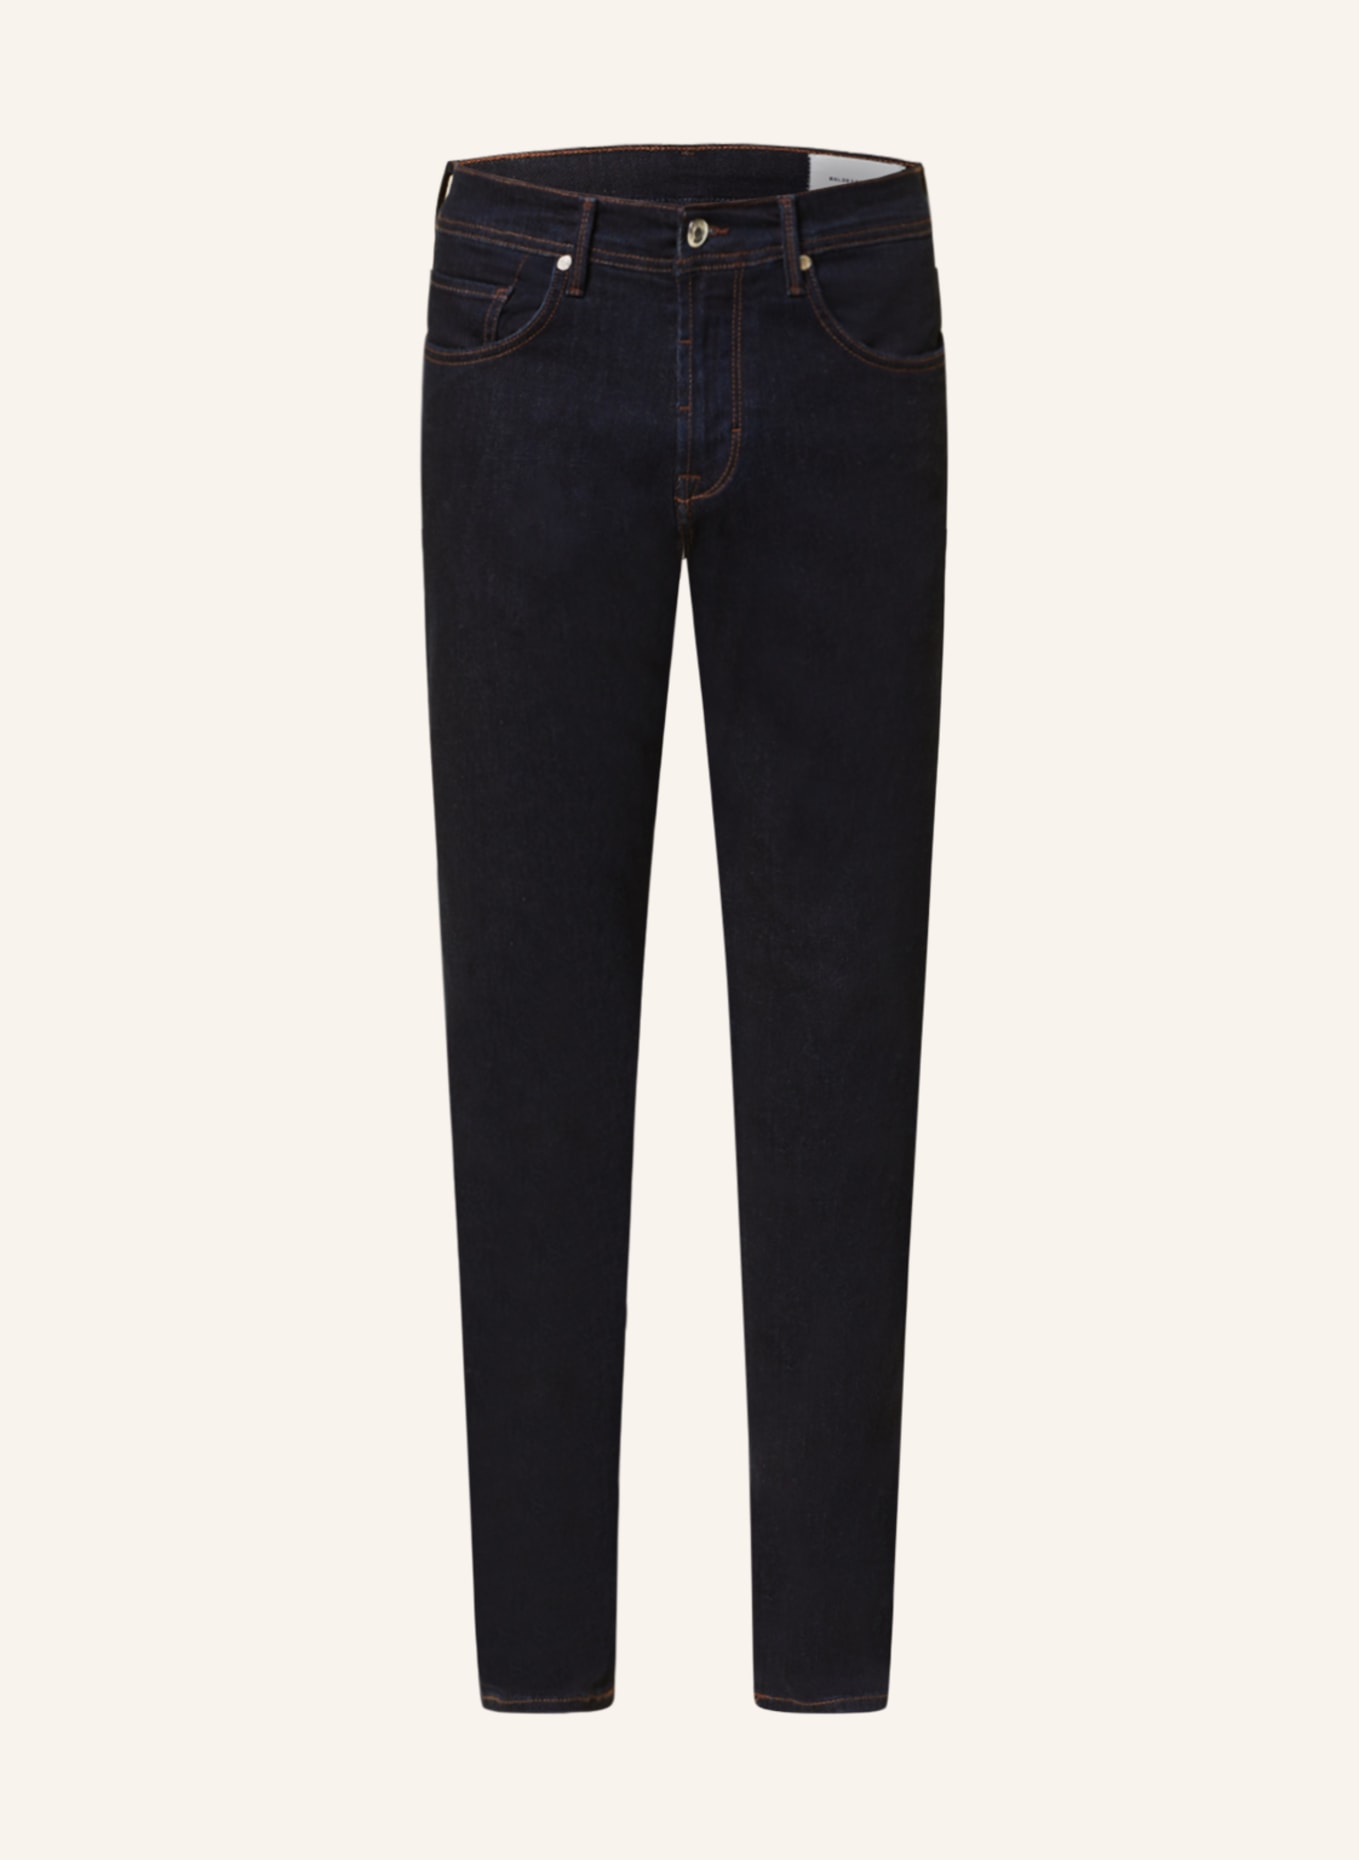 BALDESSARINI Jeans Regular Fit, Farbe: 6811 dark blue stonewash (Bild 1)